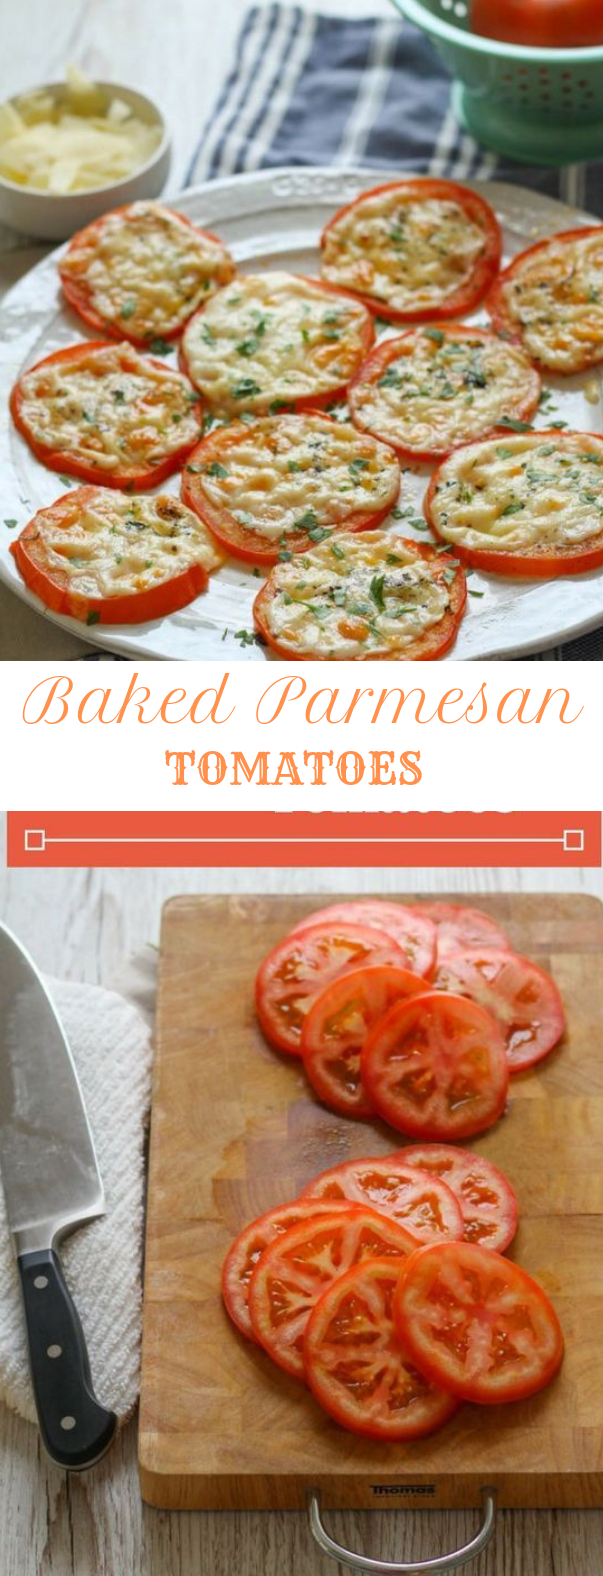 BAKED PARMESAN TOMATOES #tomatoes #vegetarian